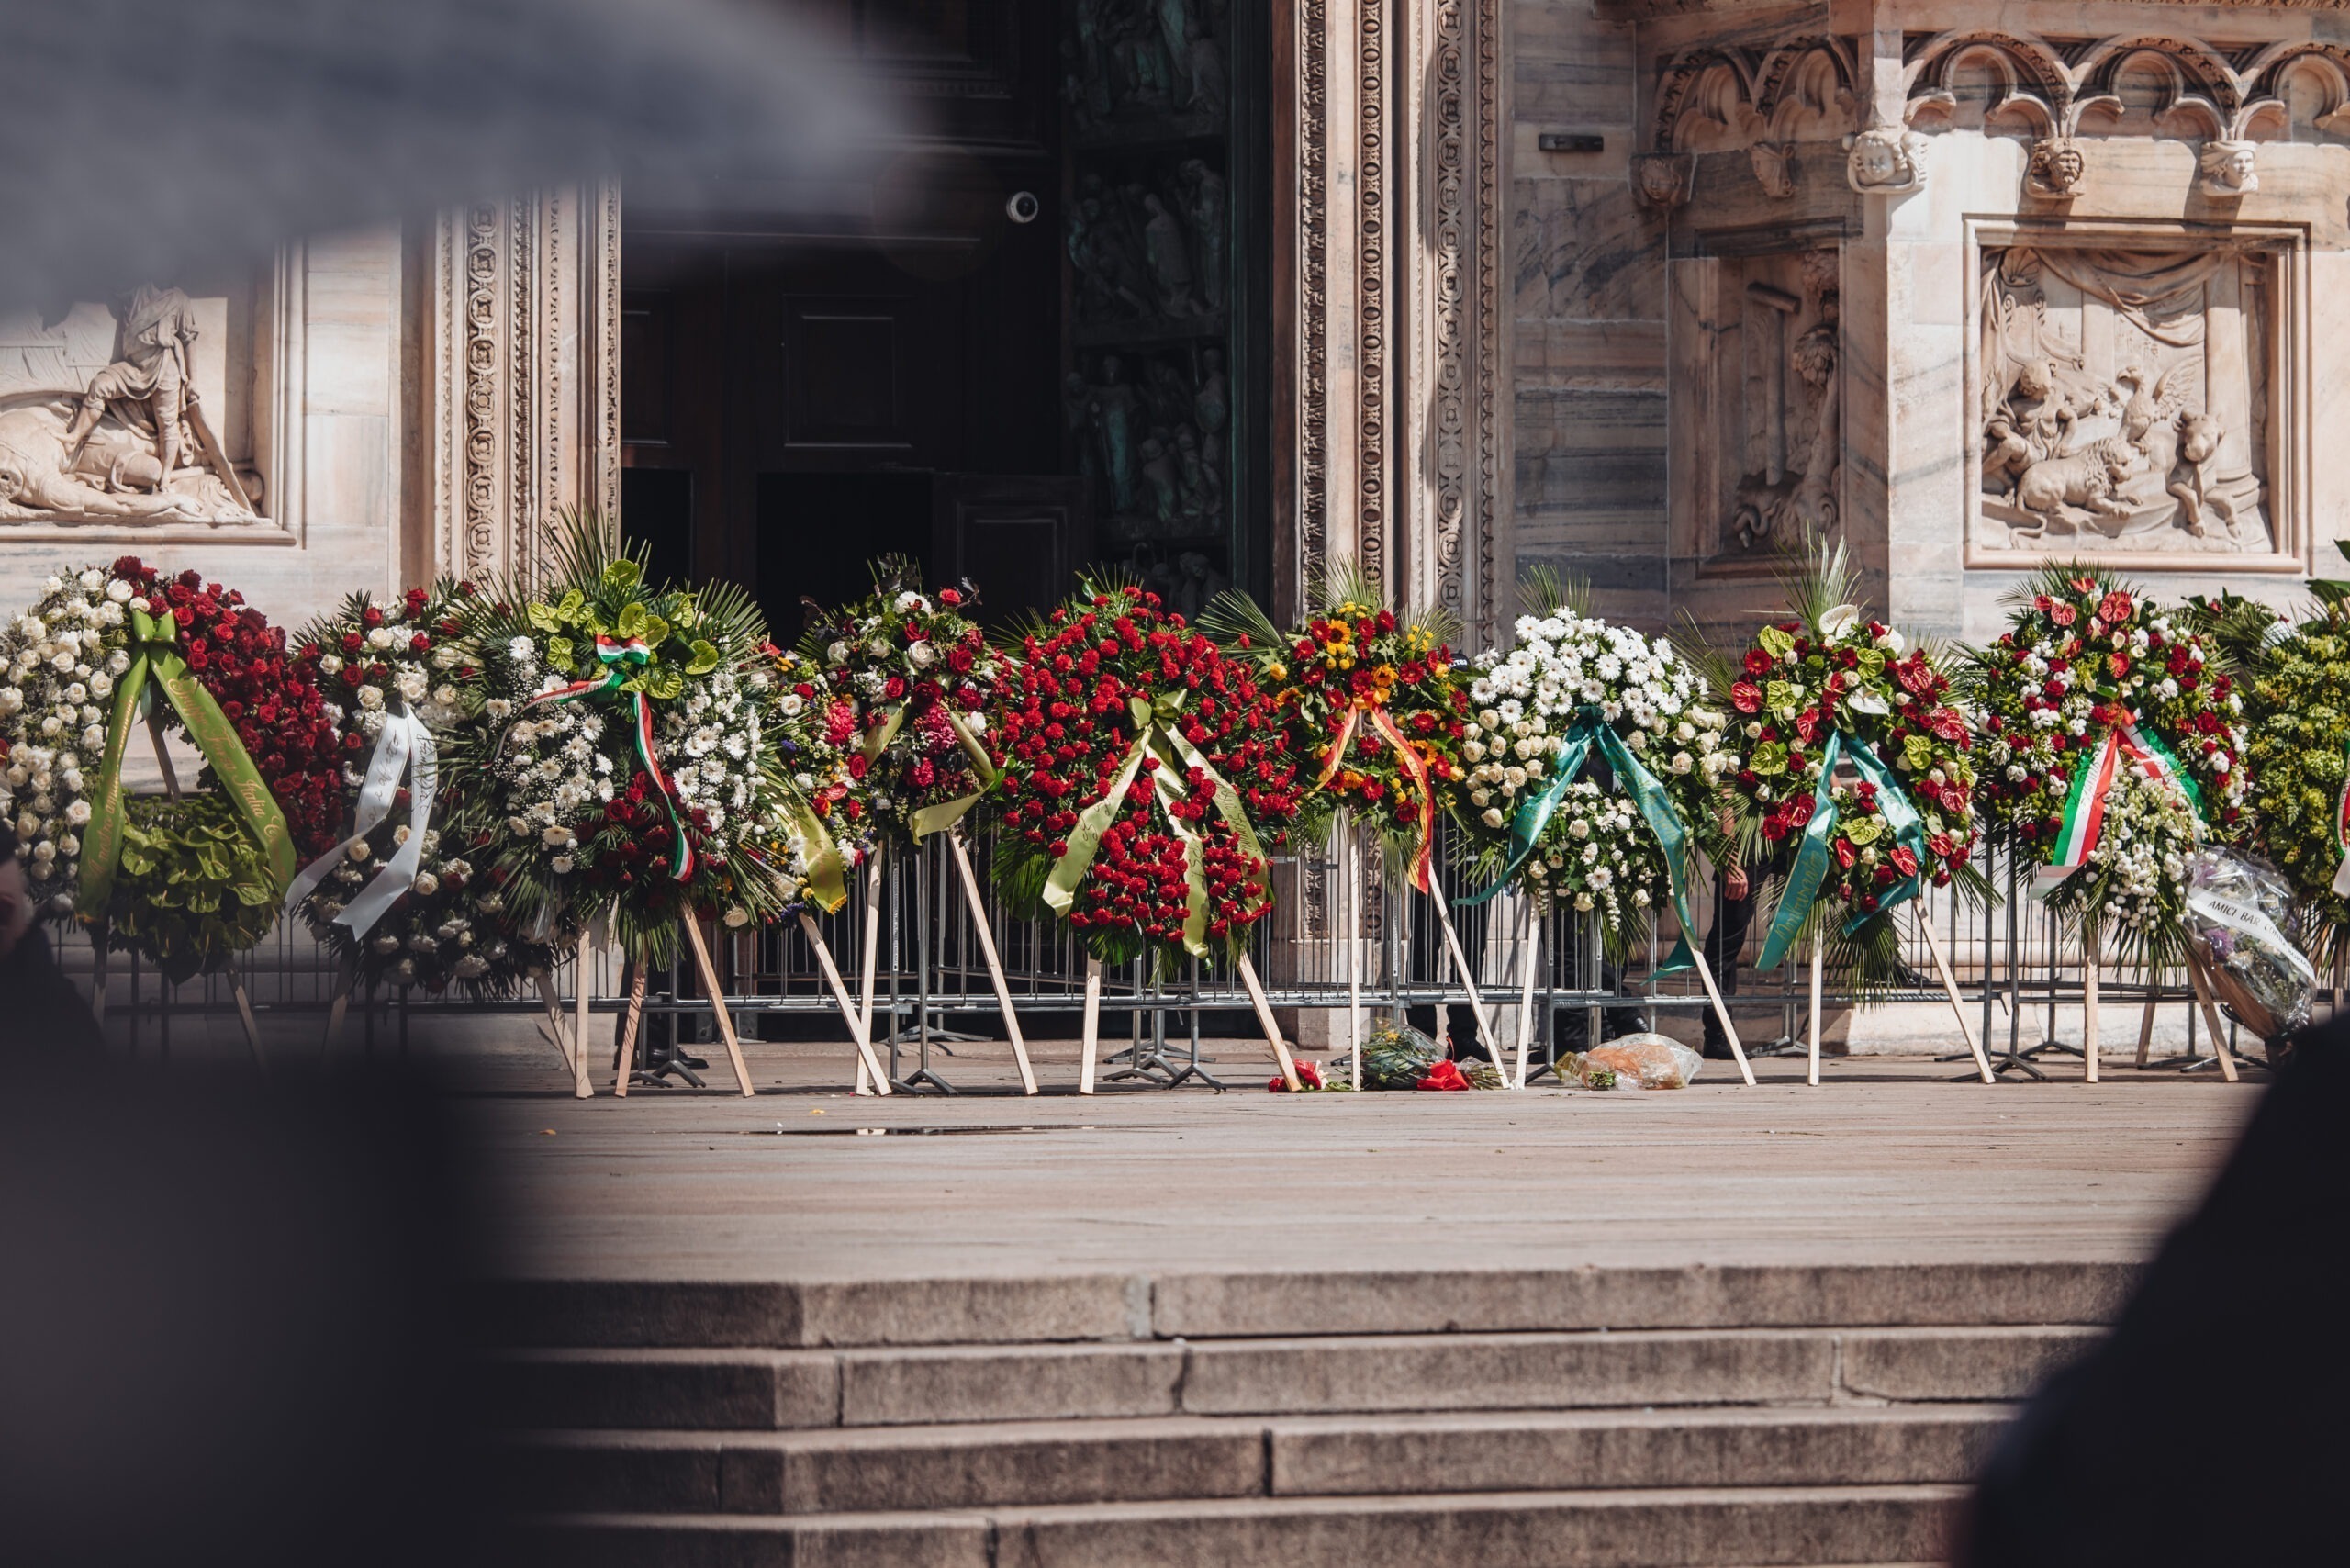 Milan, Italy – June 2023: The state funeral of Silvio Berlusconi